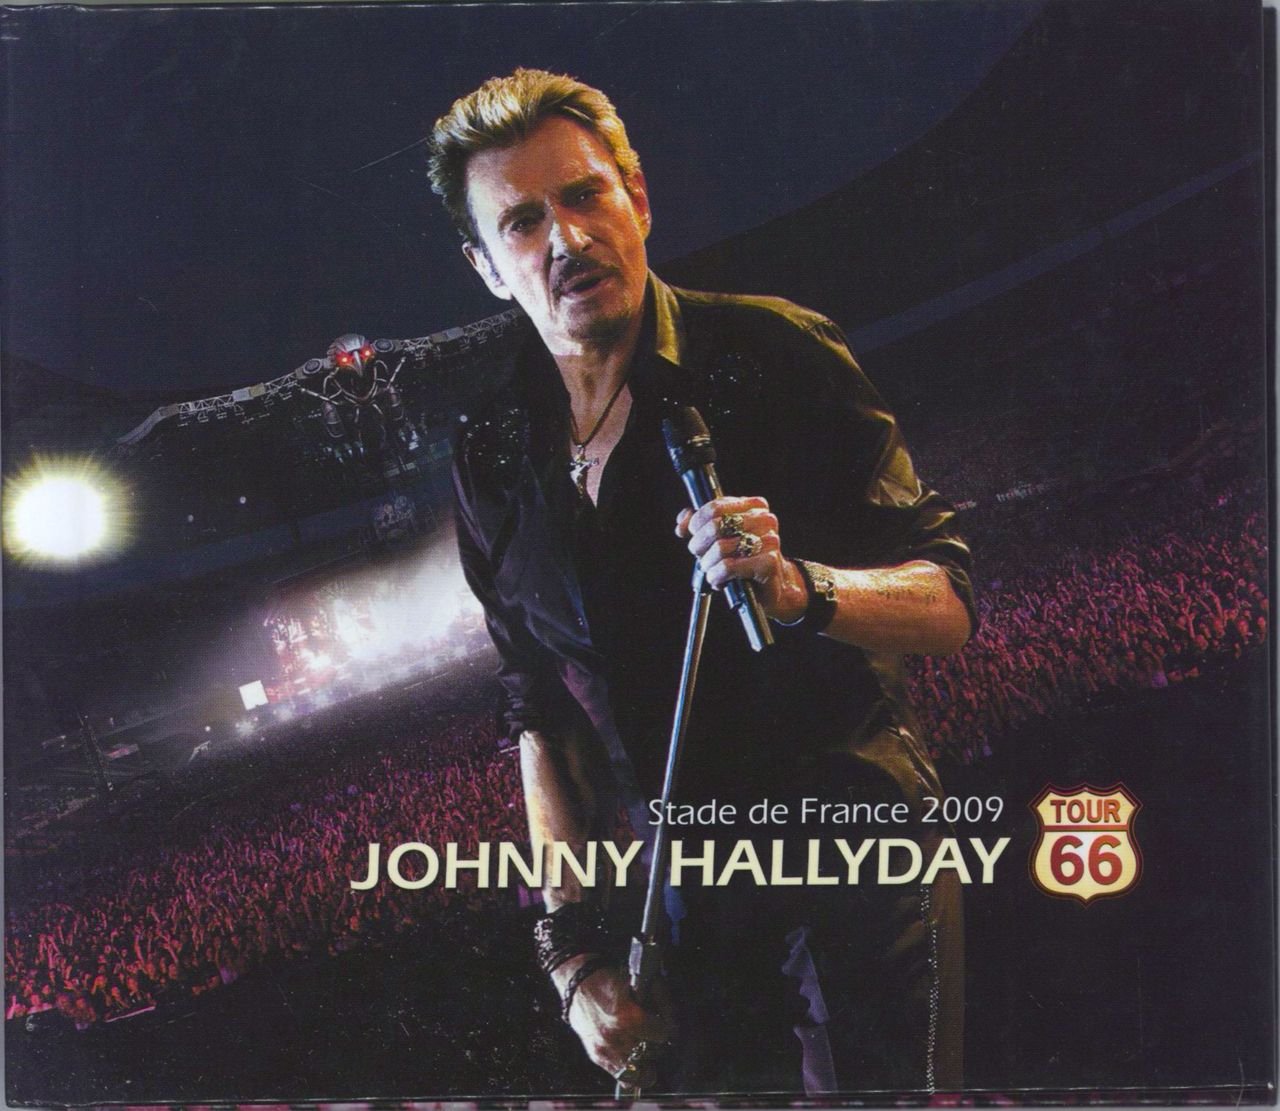 Johnny Hallyday Stade De France 2009 - Tour 66 French 3-CD set